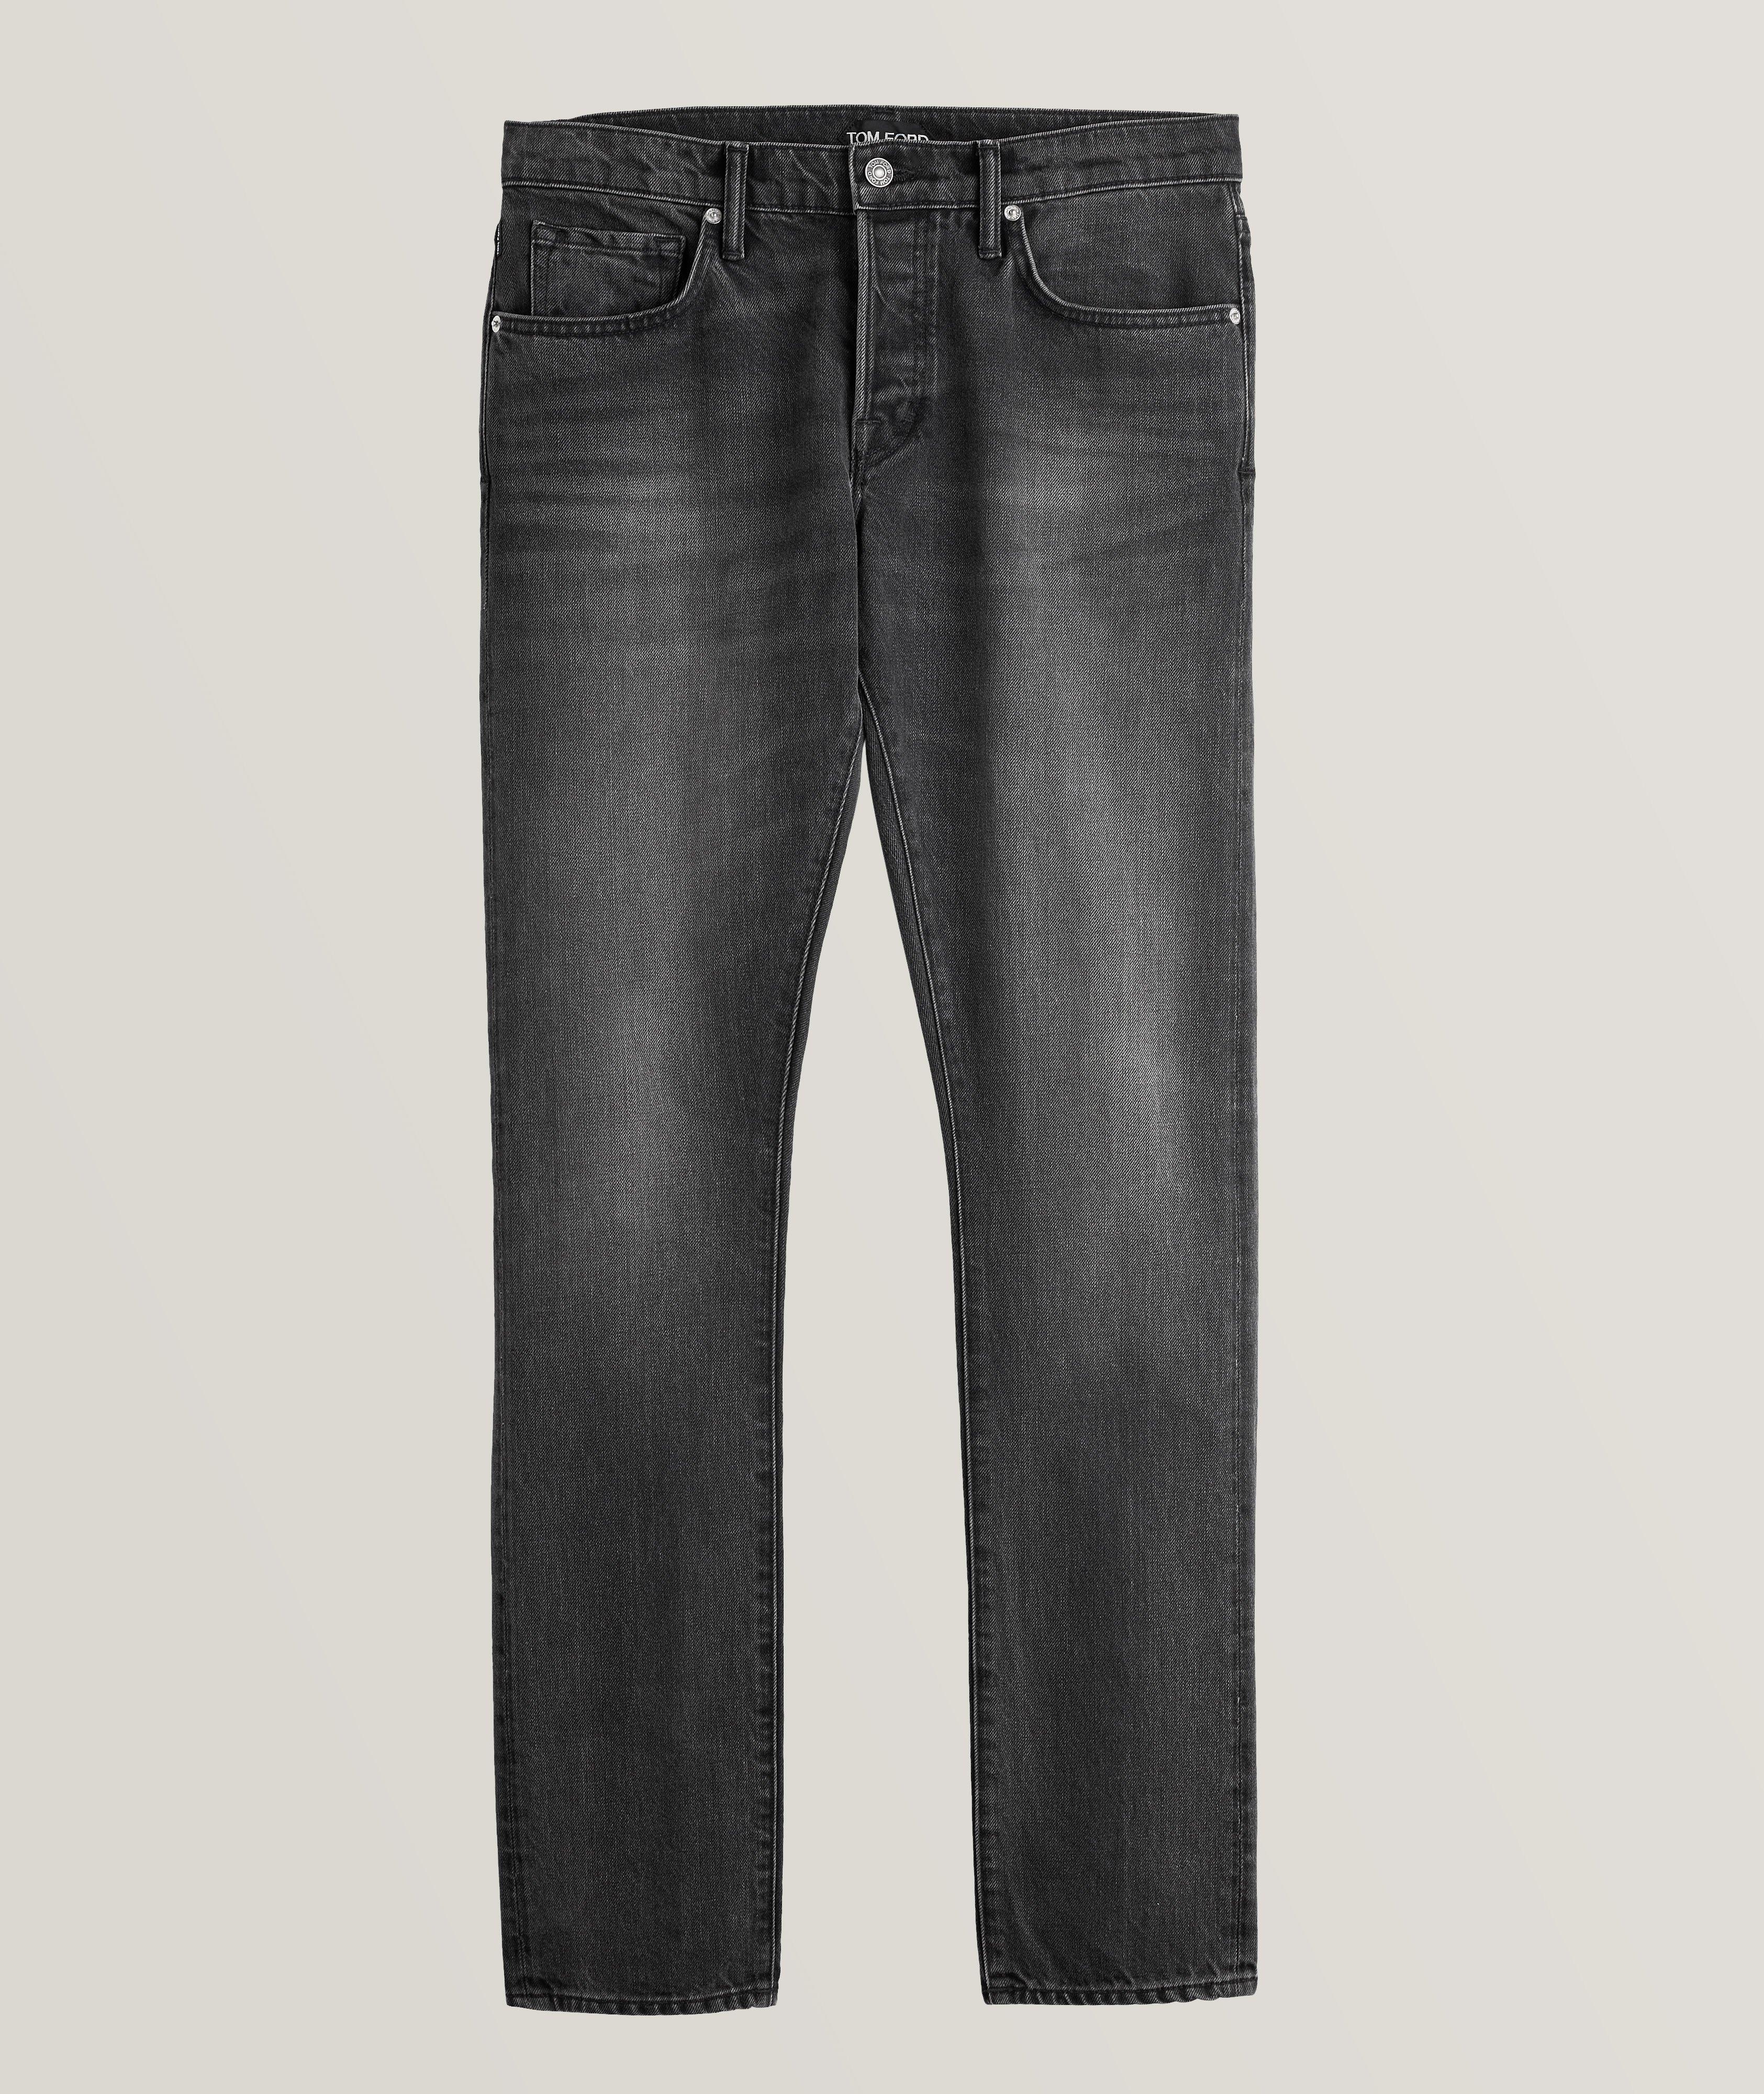 Slim Fit Aged Black Wash Cotton Jeans image 0